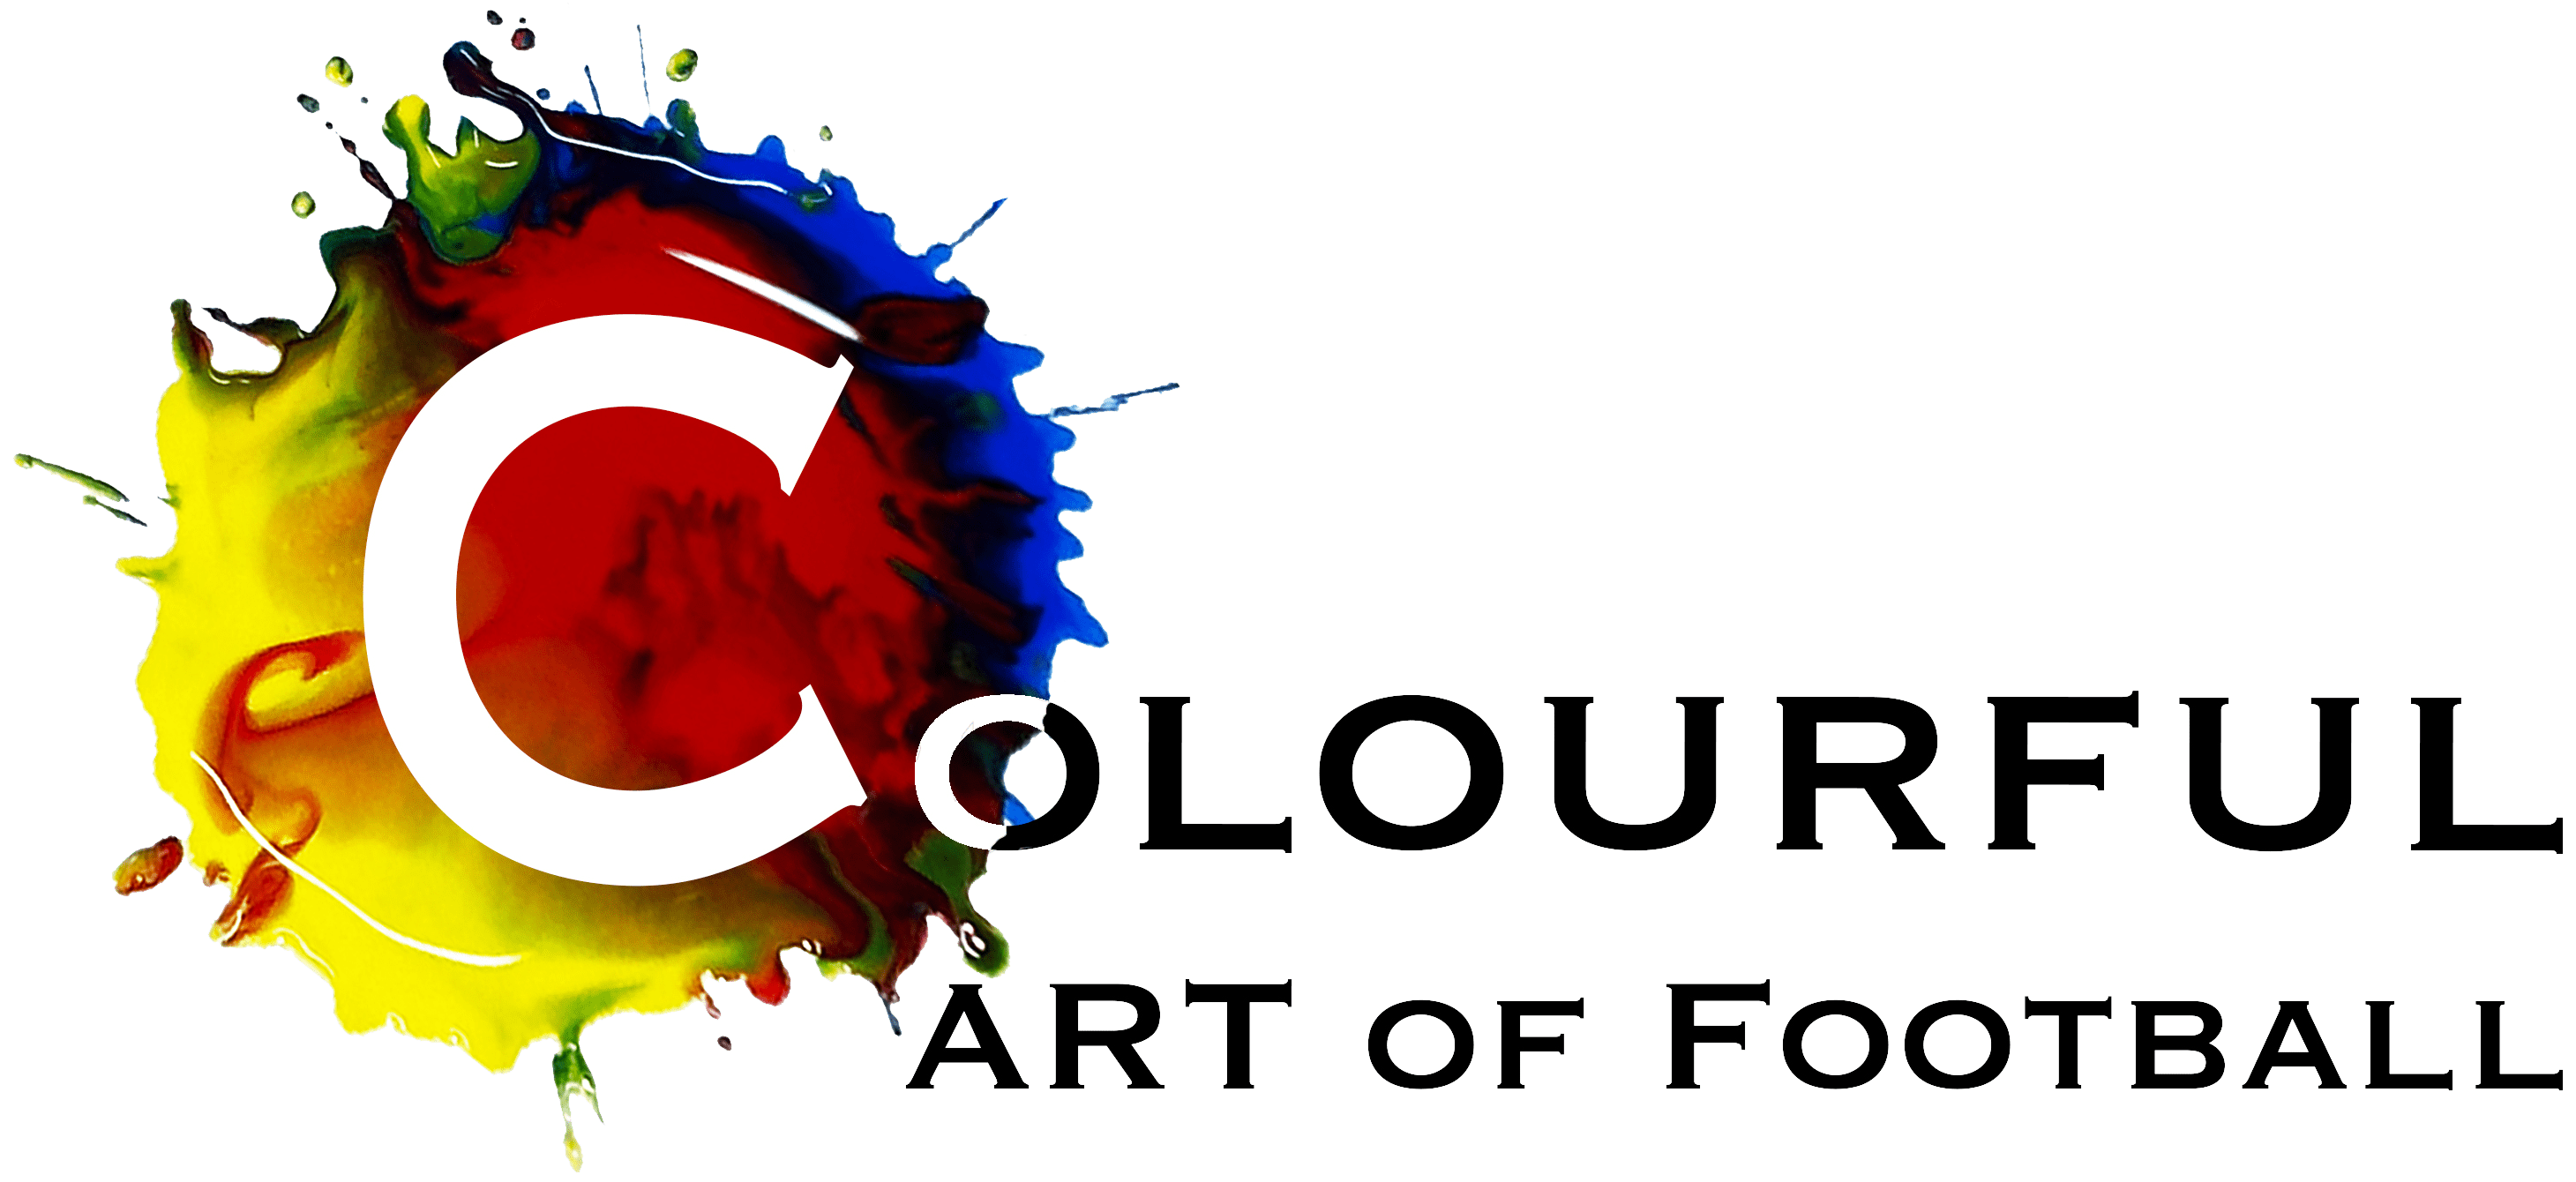 colourful art of football